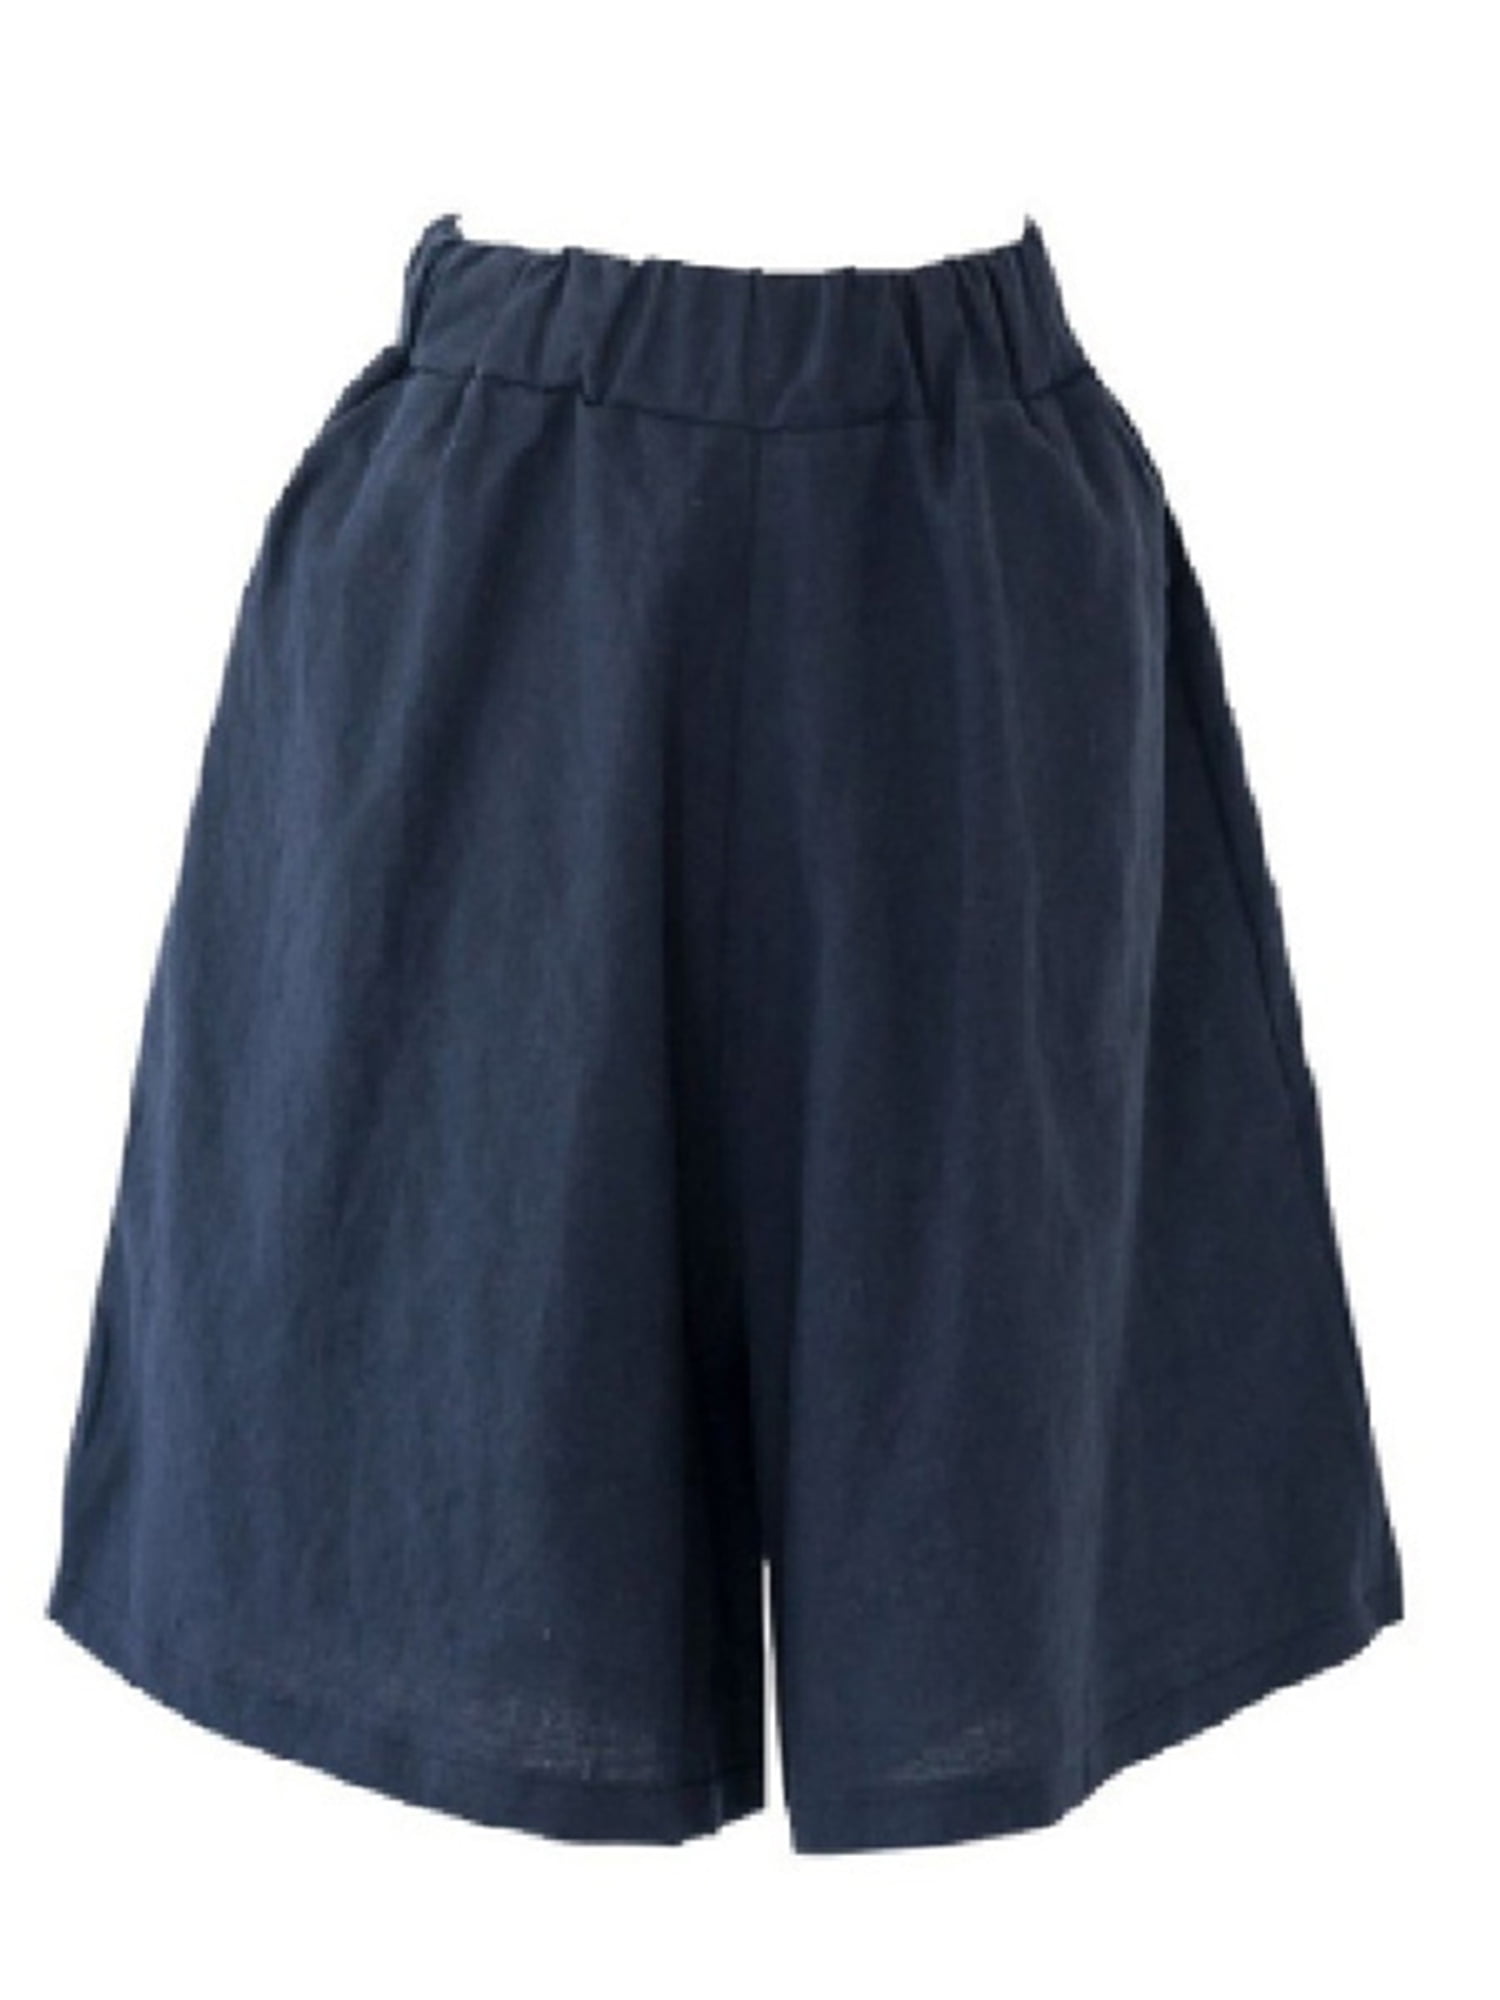 Wrcnote Women Cotton Linen Bermuda Shorts Casual Beach Hawaii Short Hot ...